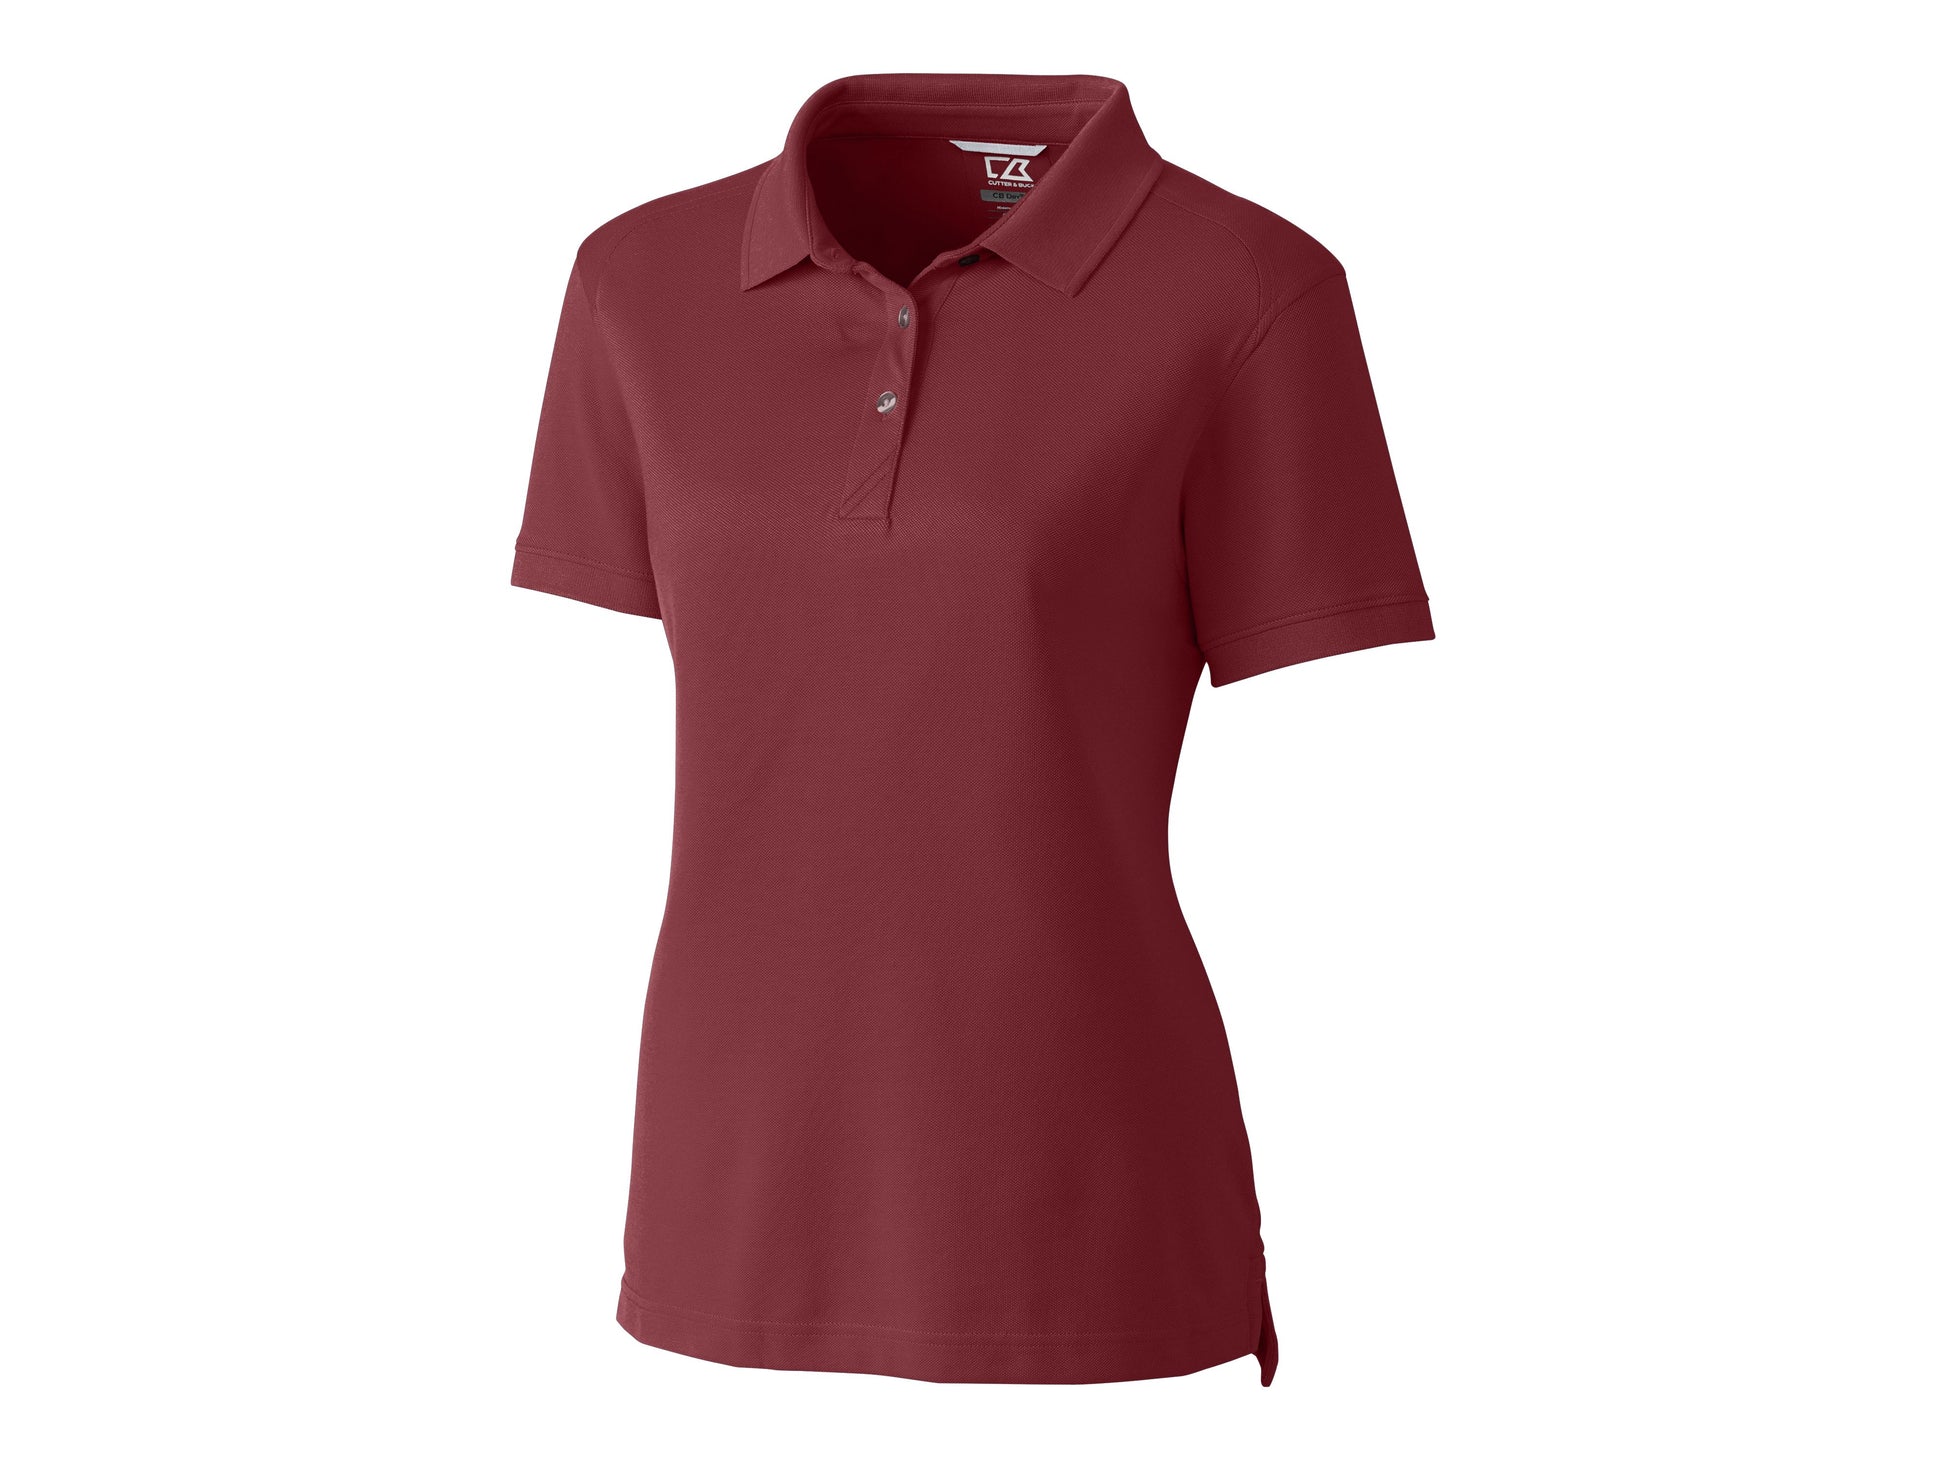 Cutter and Buck Shirts Advantage Polo (Women's Cut) - LCK08685 - Bordeaux